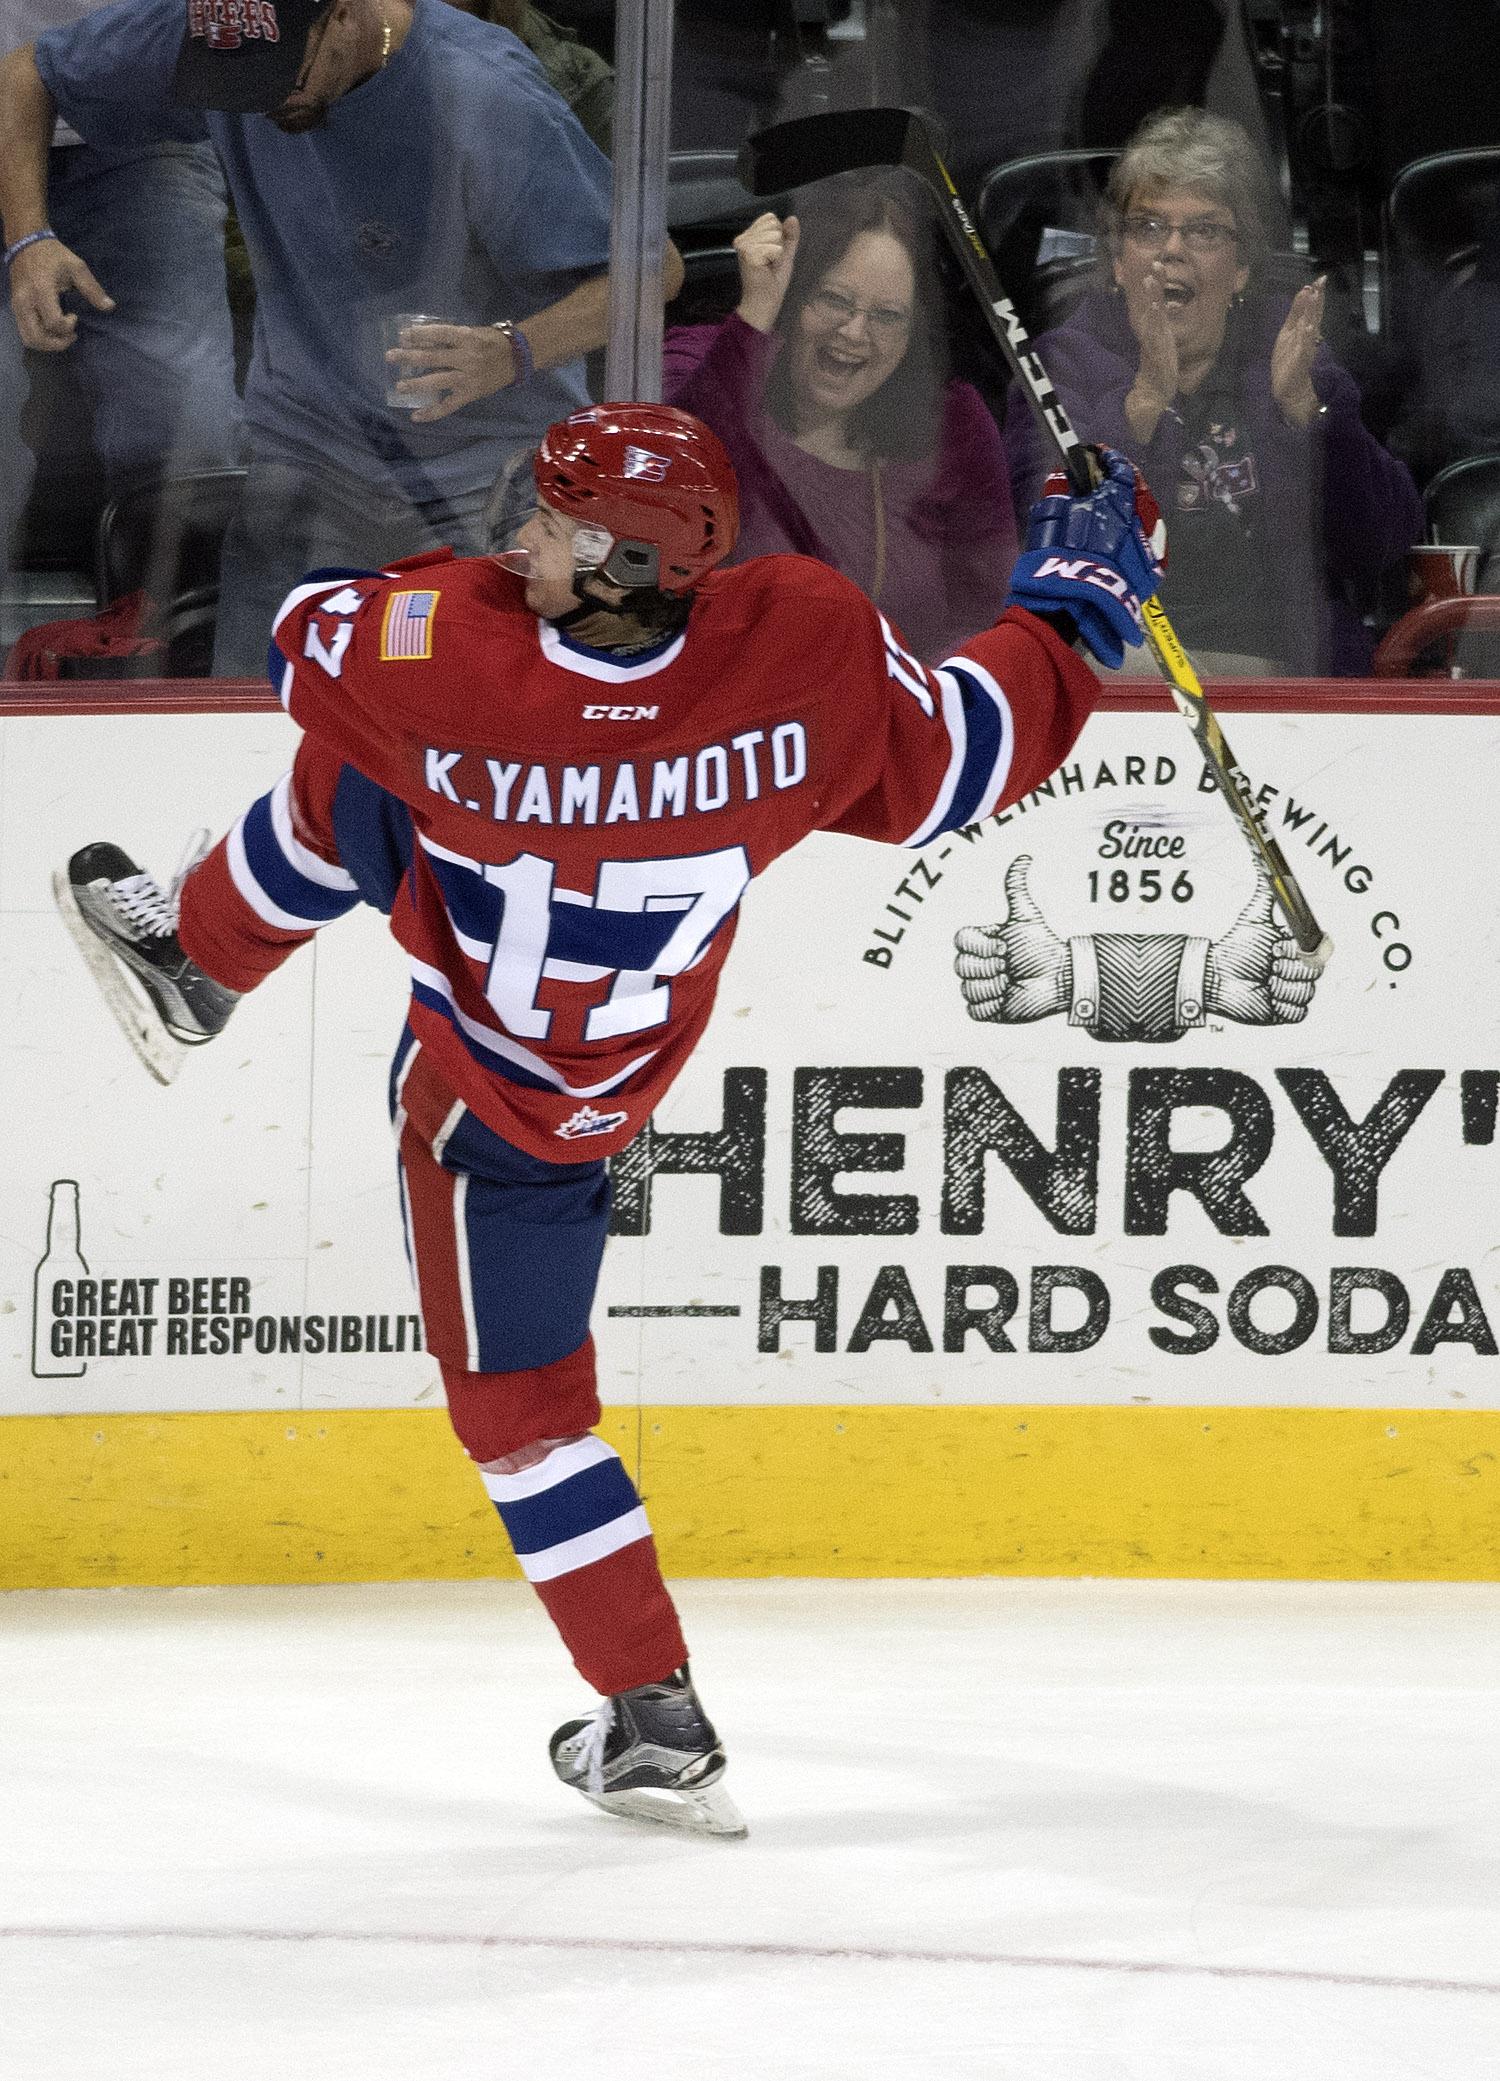 Kailer Yamamoto showcases skill in CHL/NHL prospects game